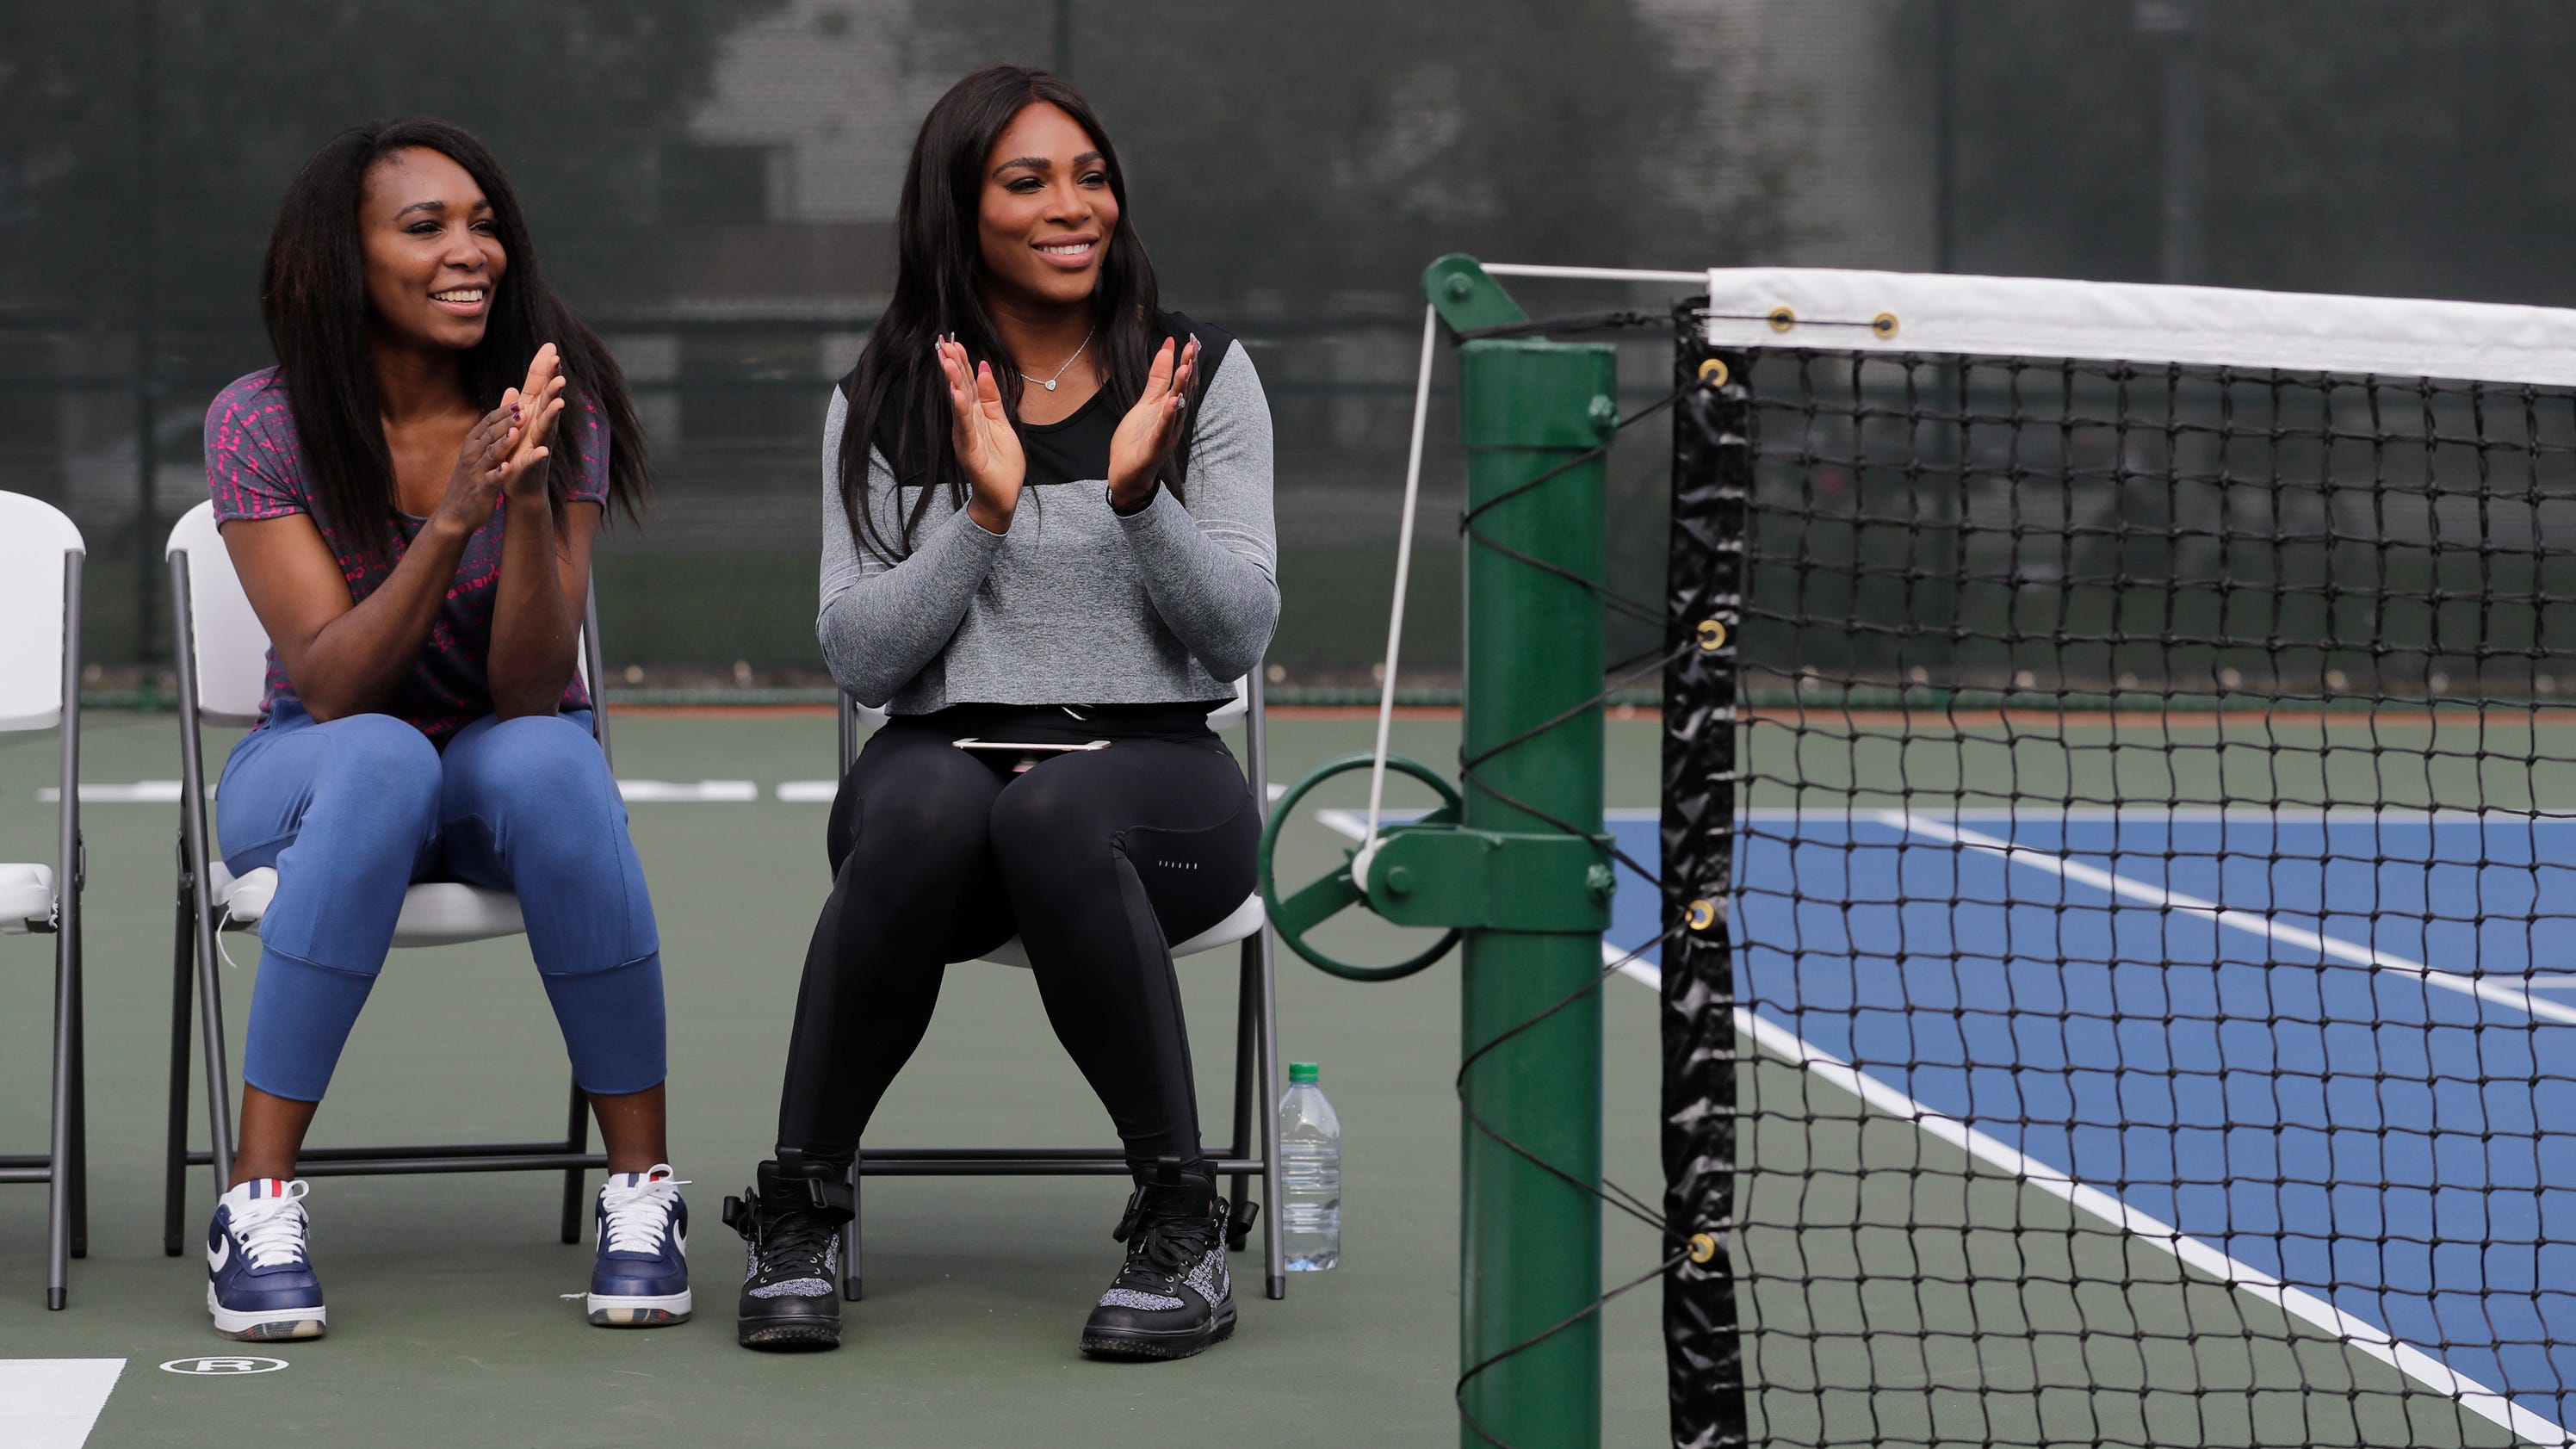 Straight back to Compton: Venus and Serena Williams go home